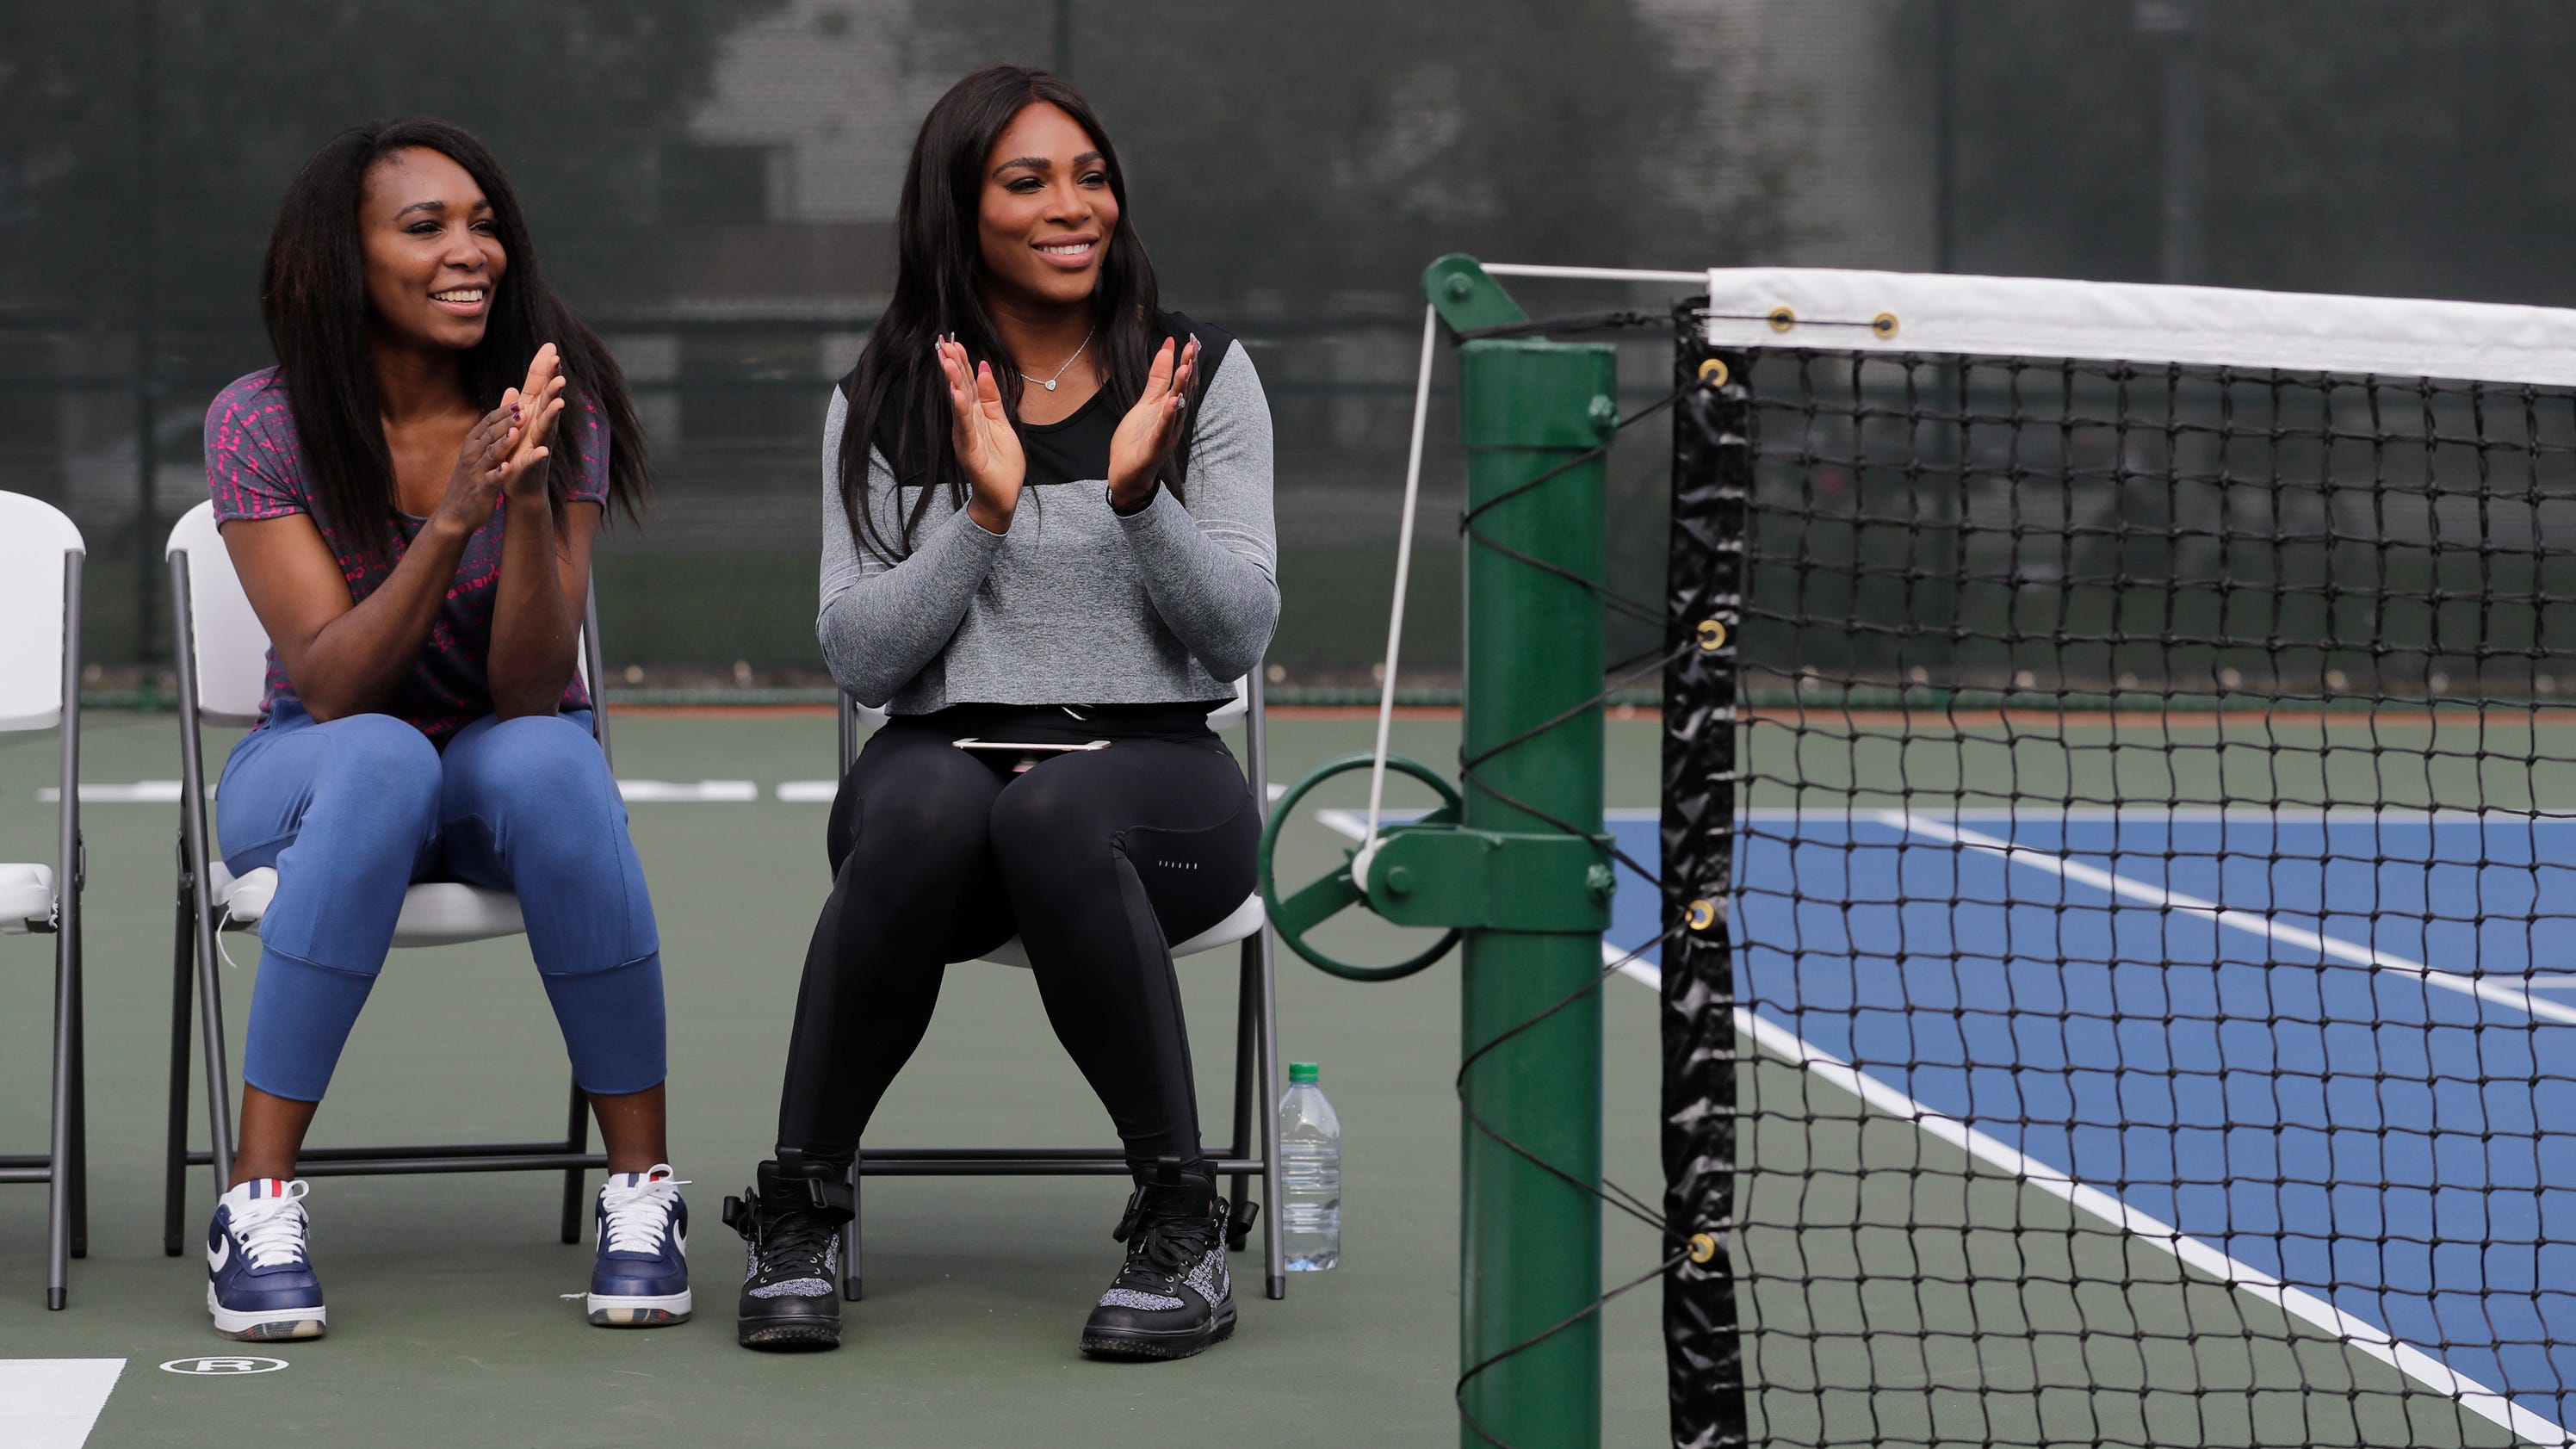 Straight back to Compton: Venus and Serena Williams go home